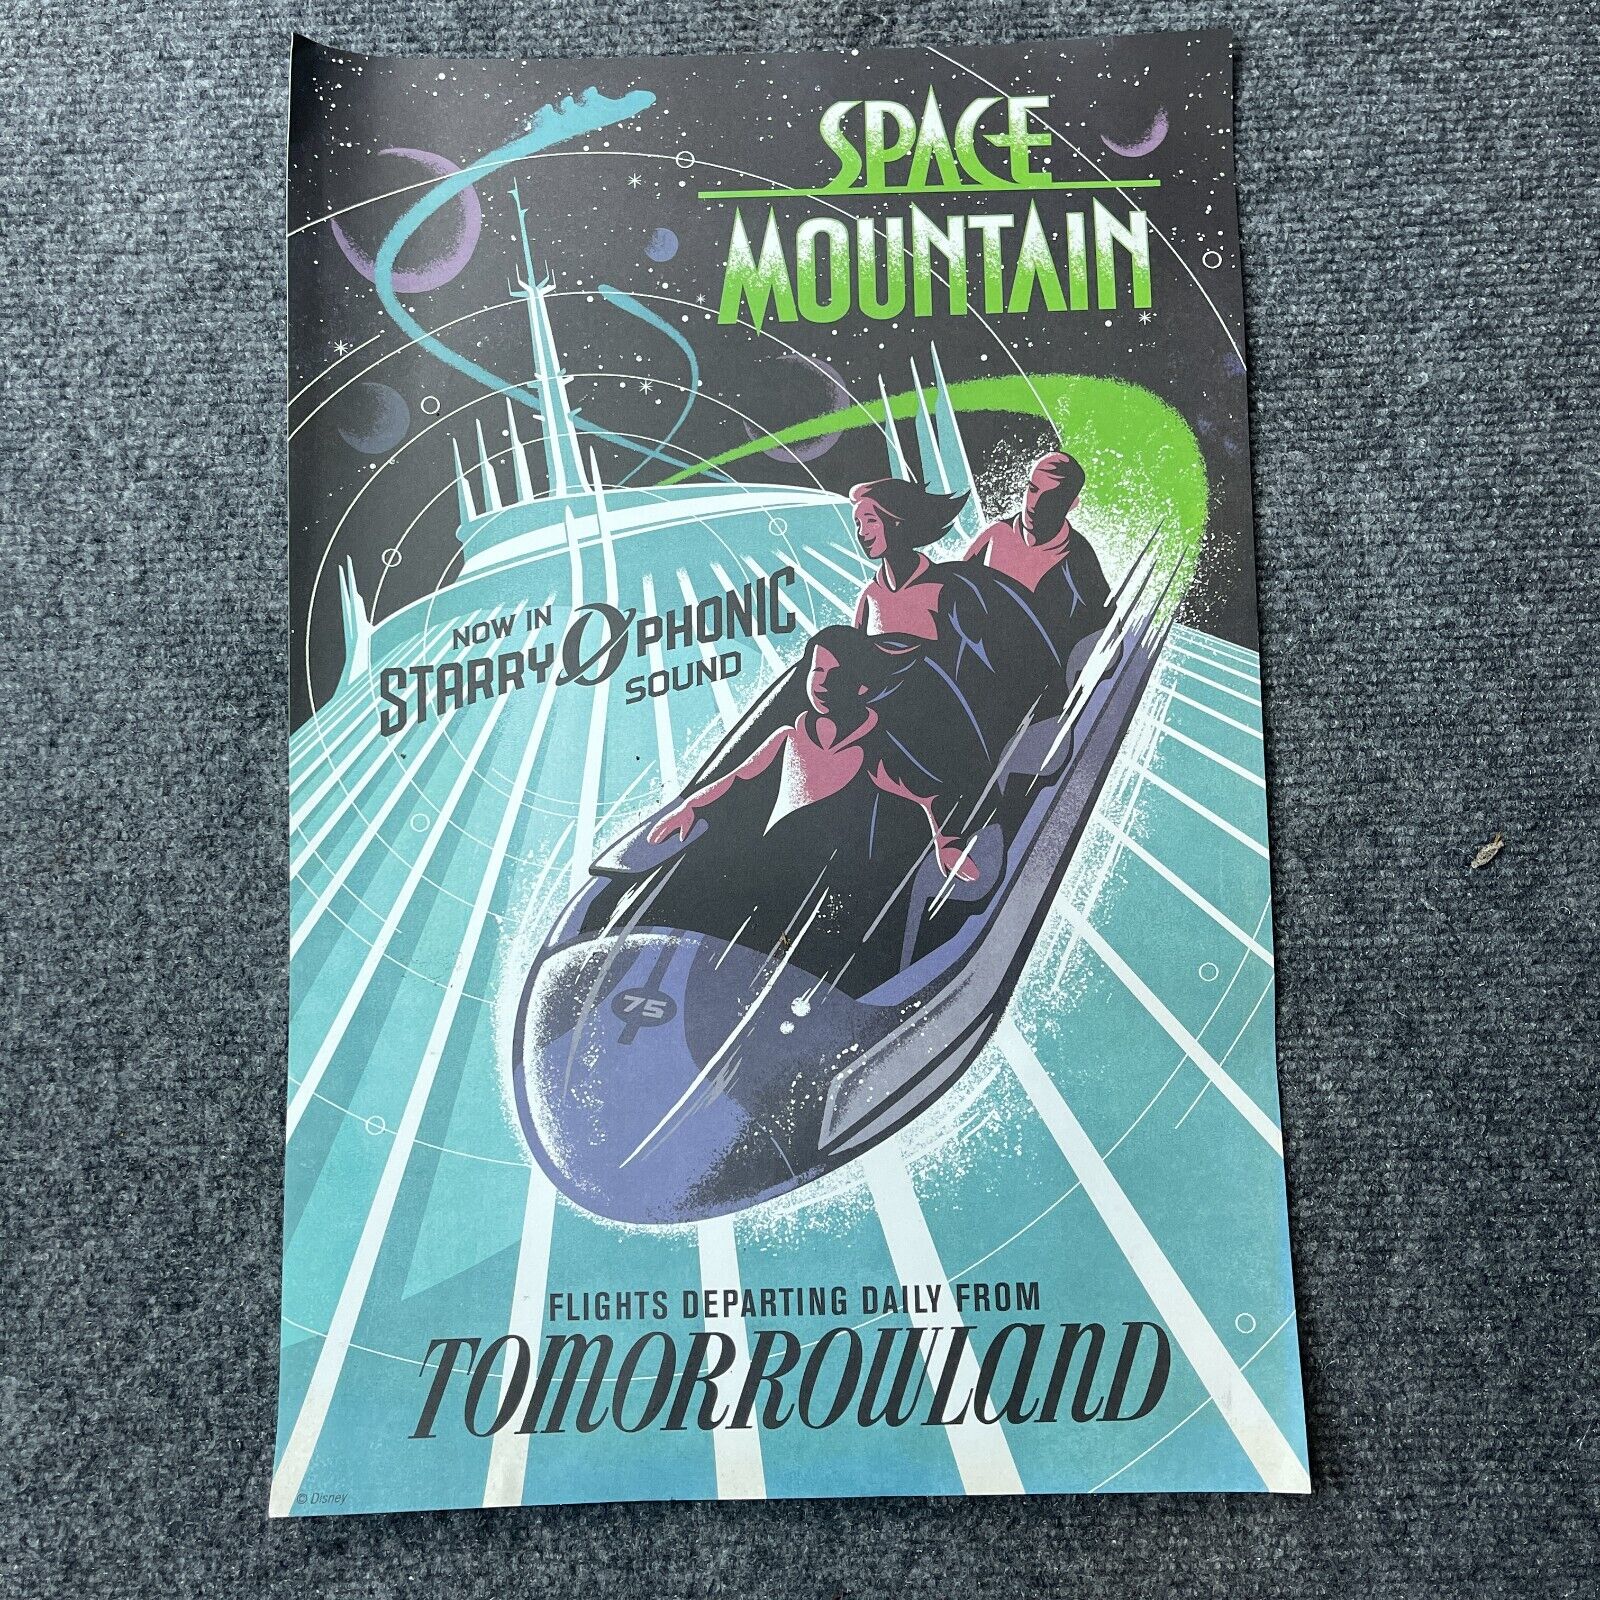 Vintage Disney Space Mountain Tomorrowland Attraction Promo Poster